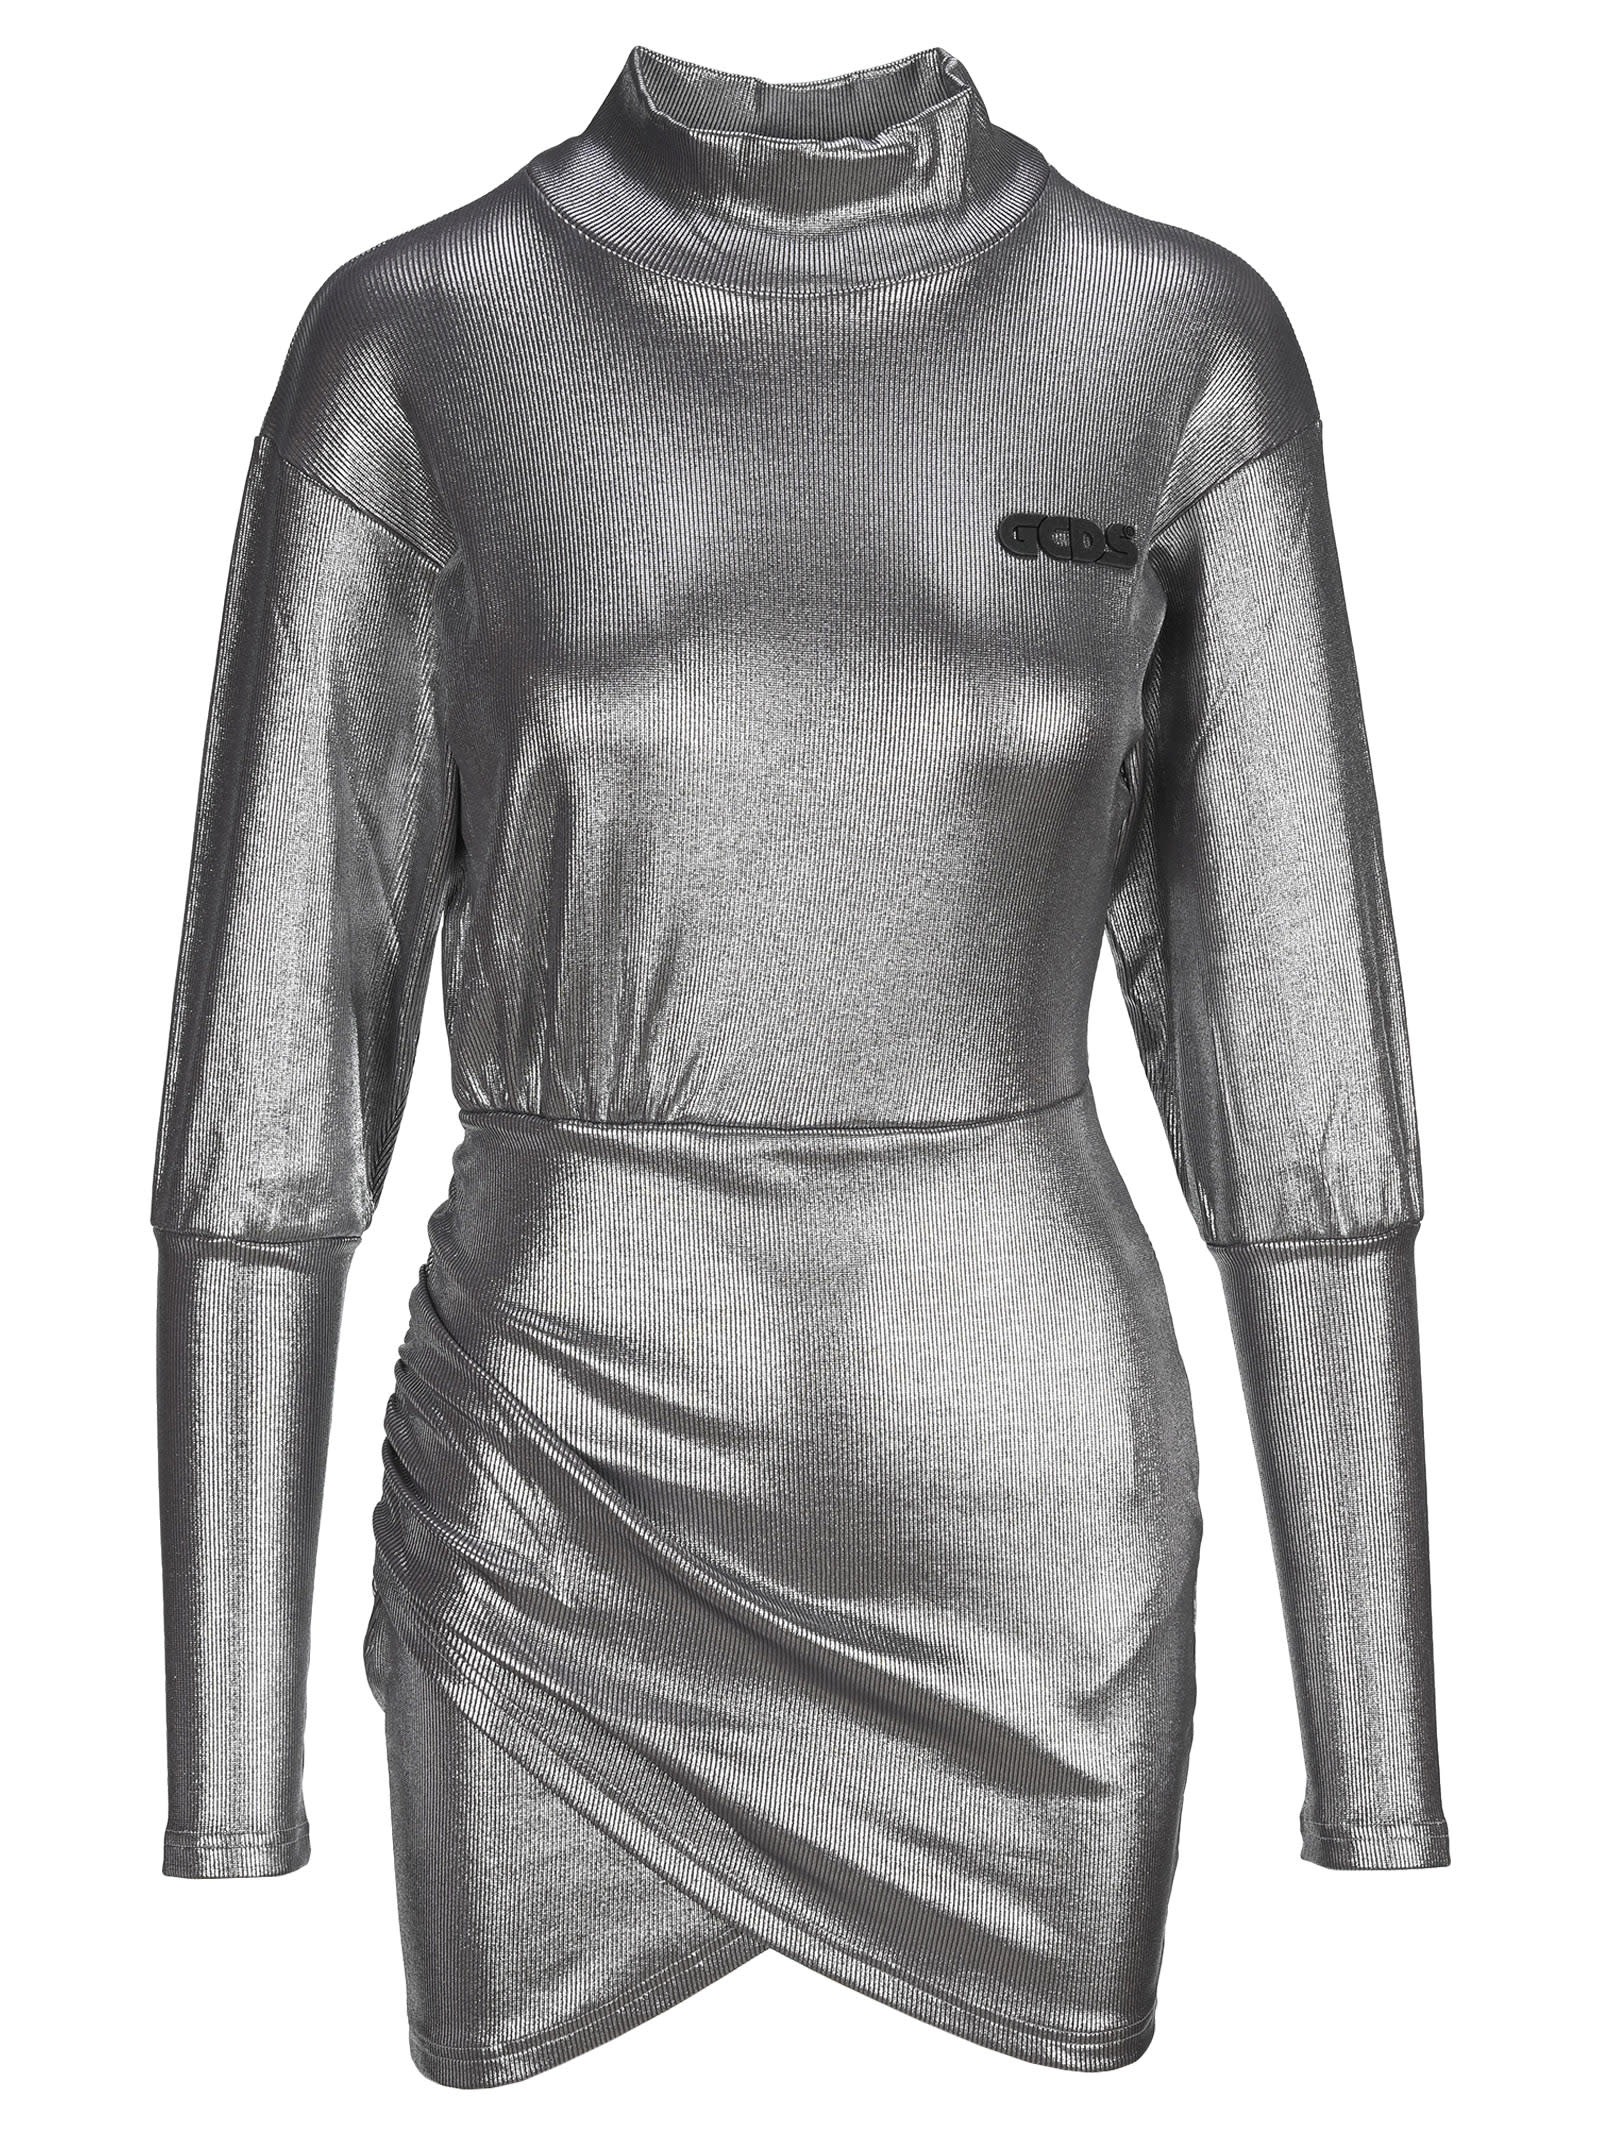 Gcds Metallic Wrapped Dress